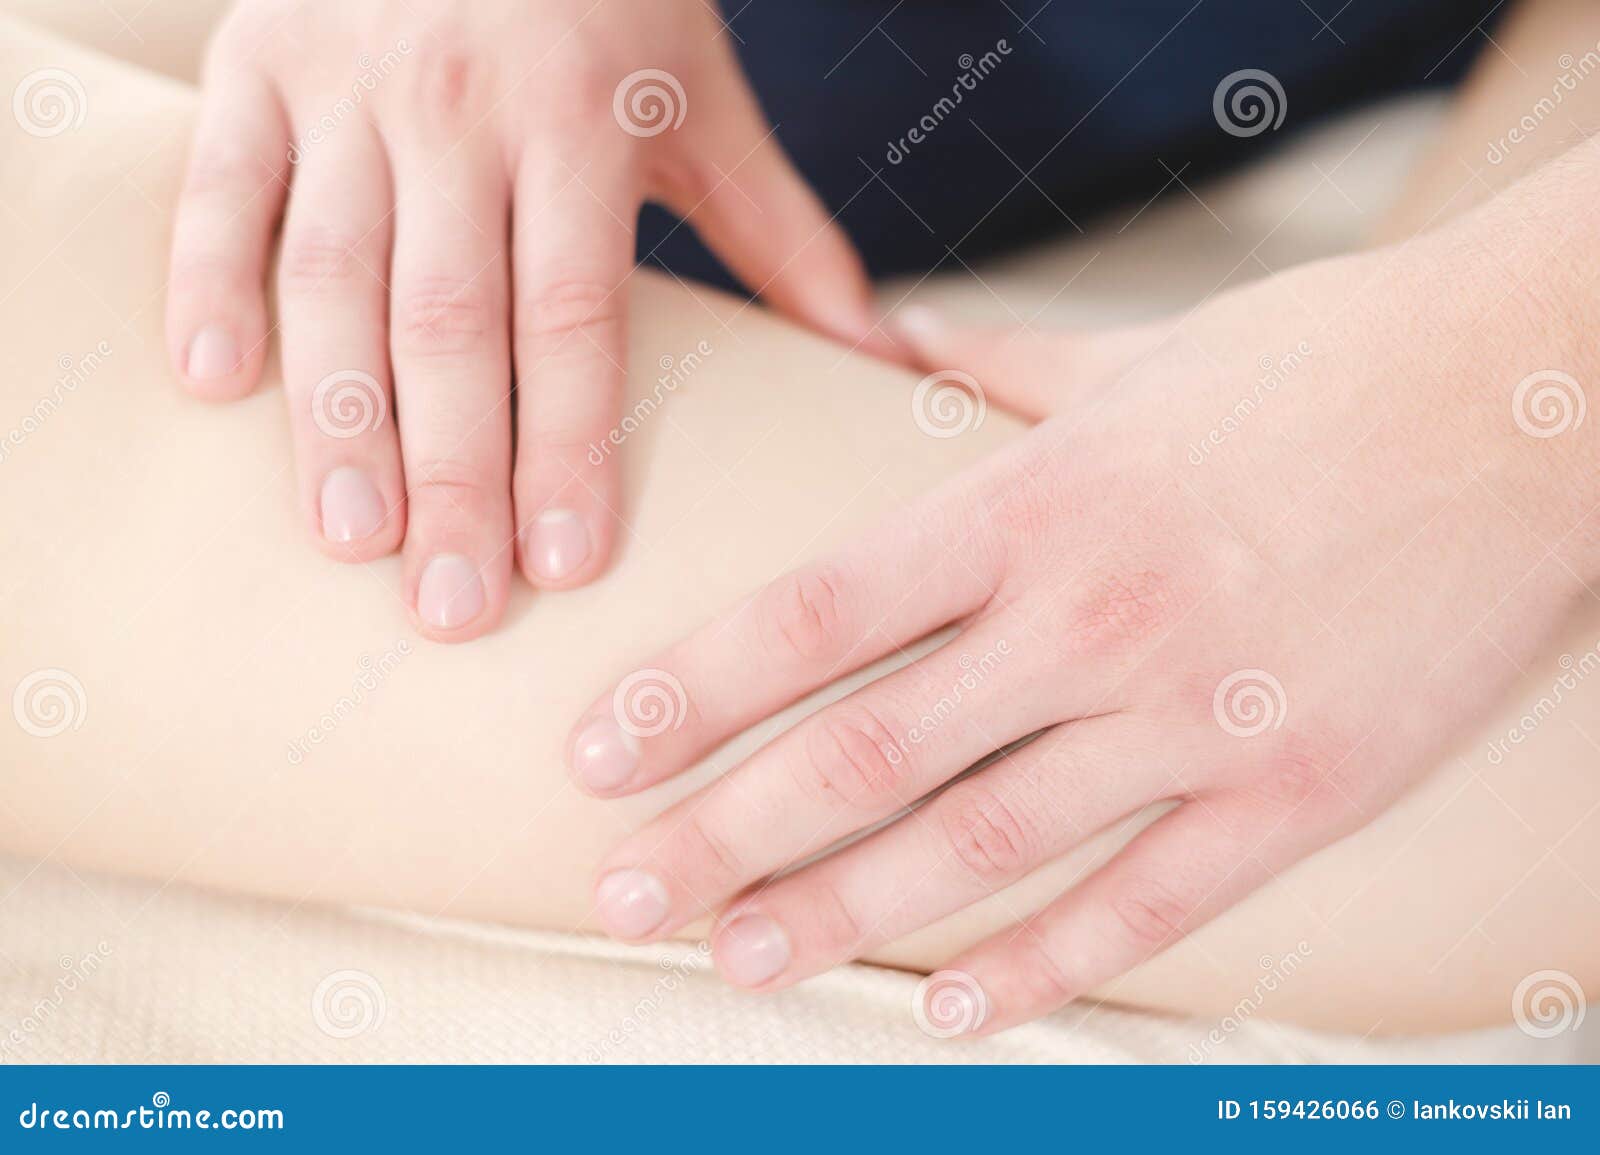 https://thumbs.dreamstime.com/z/closeup-arm-masseur-male-doing-hip-massage-to-girl-spa-salon-body-care-concept-159426066.jpg